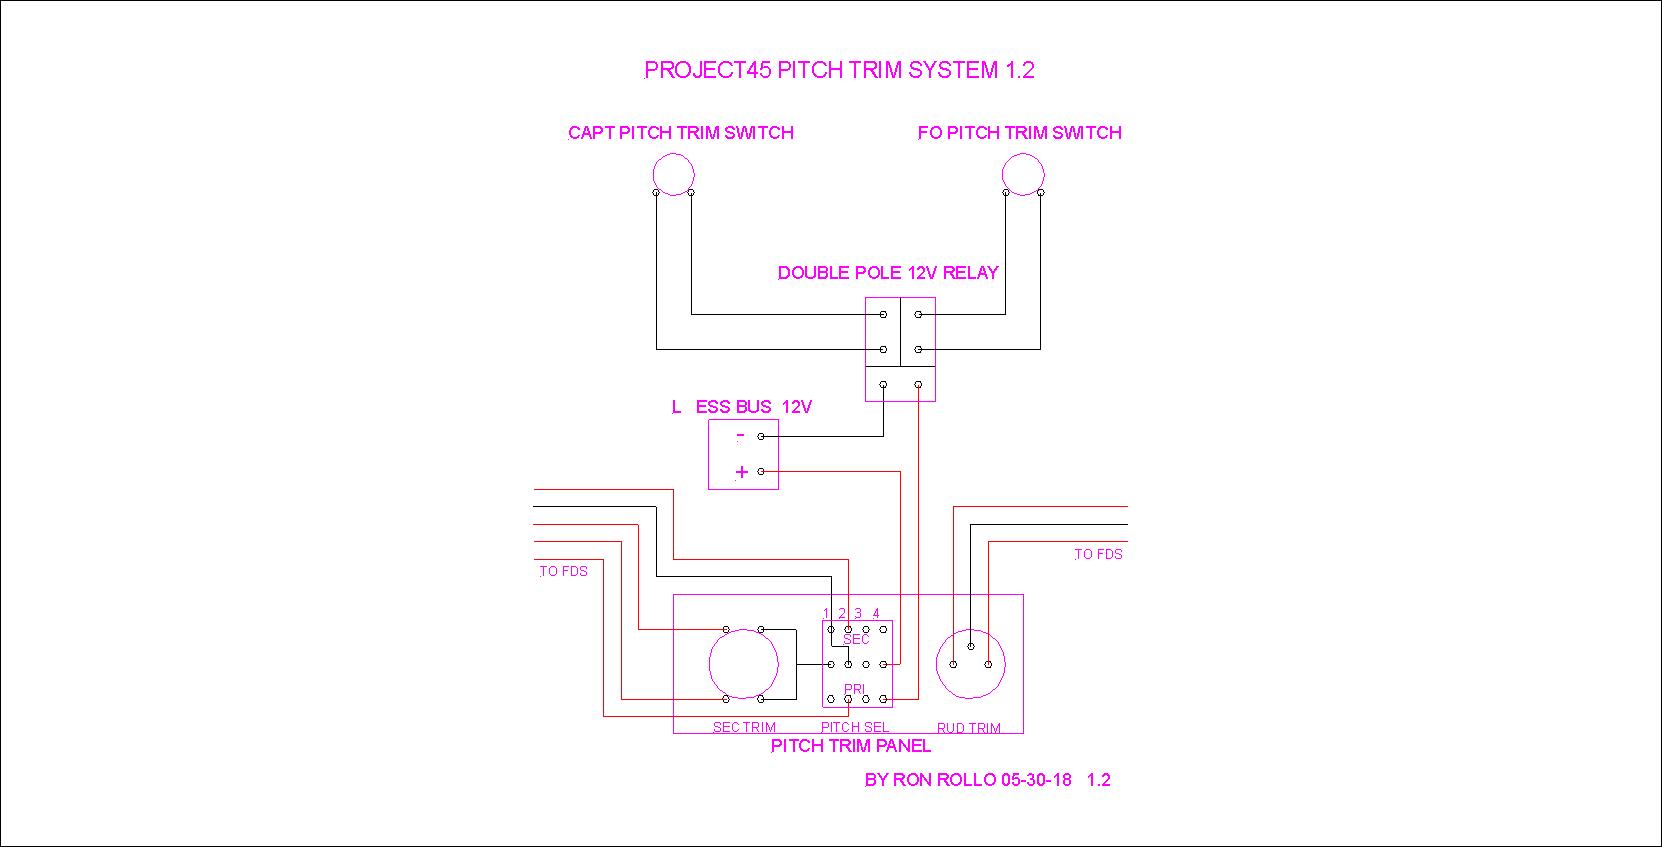 Pitch Trim System 1.2